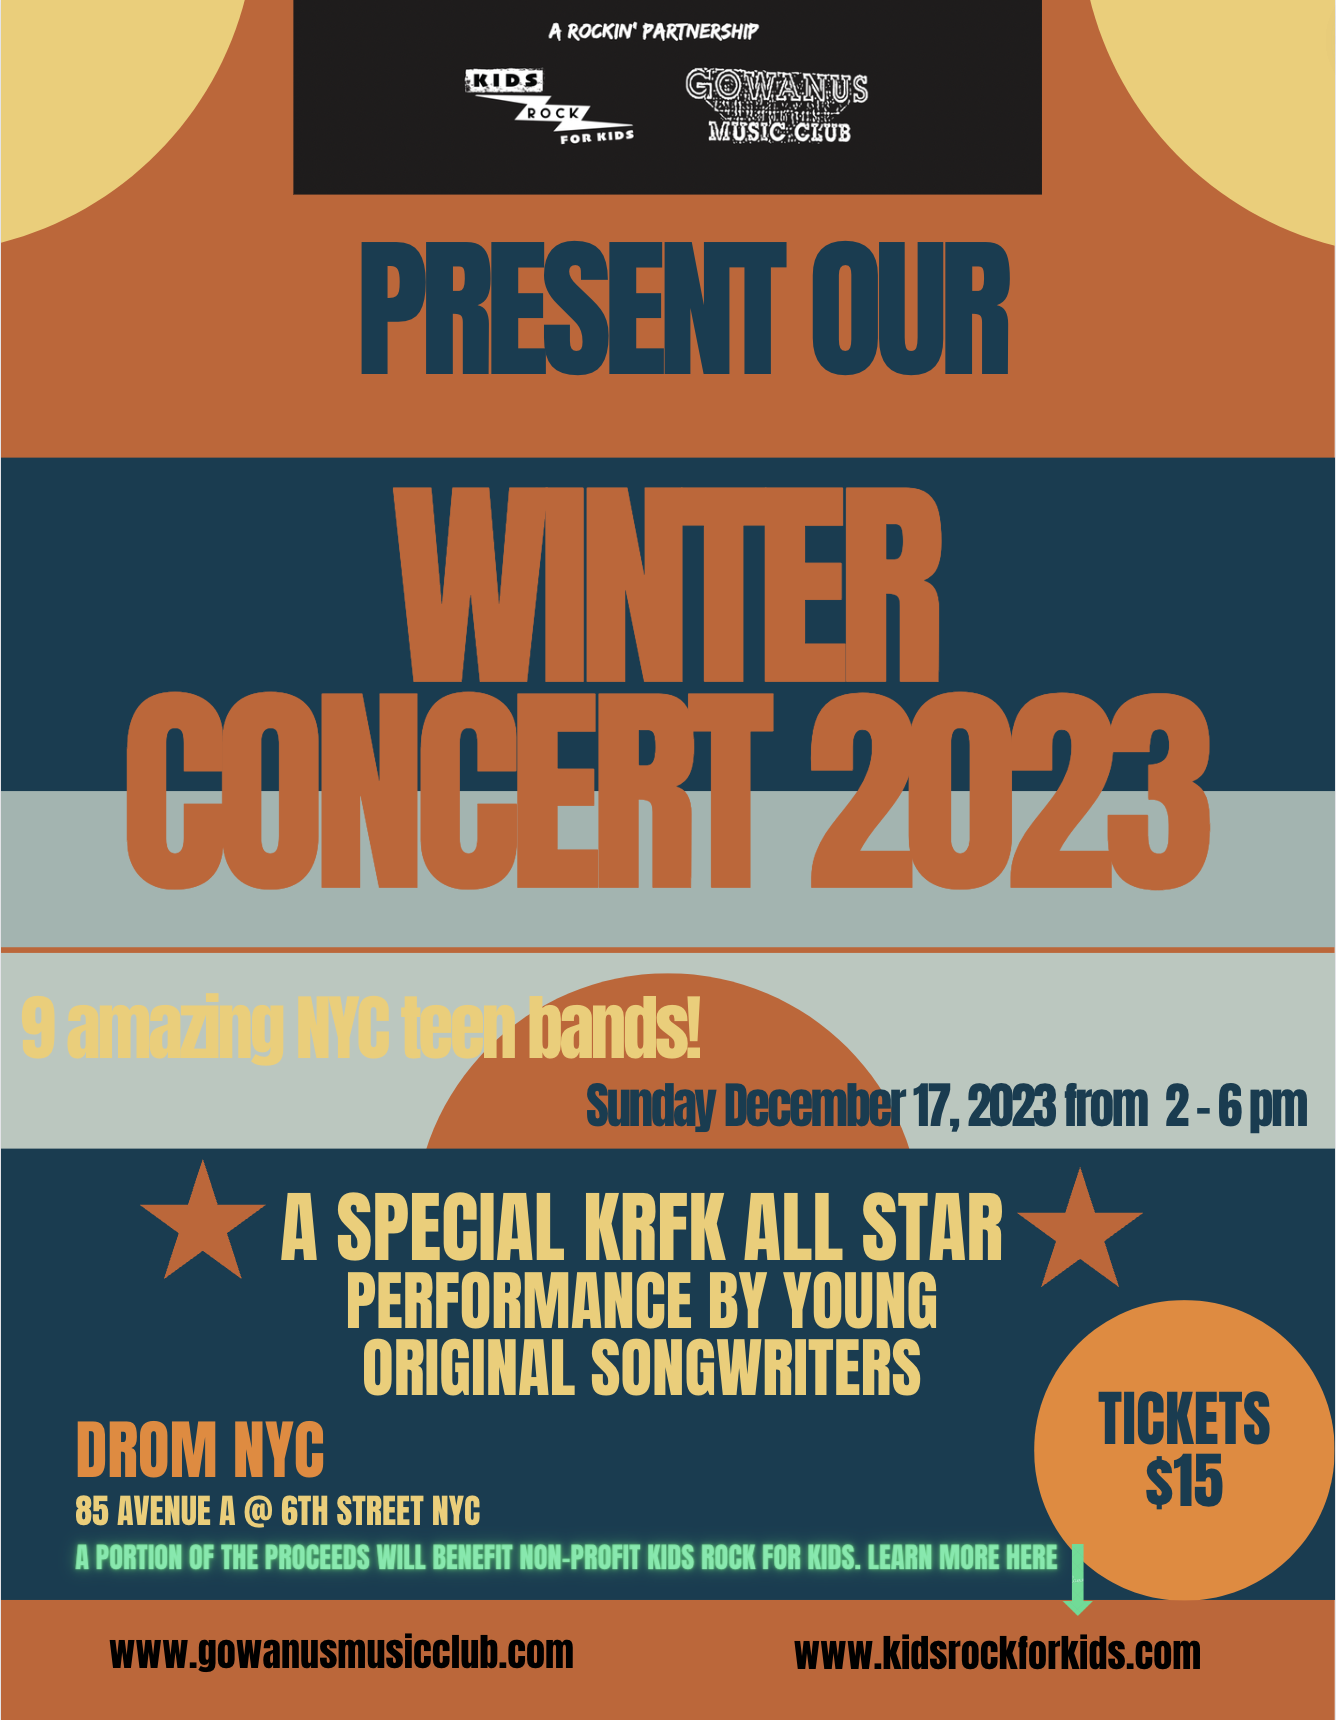 https://dromnyc.com/wp-content/uploads/2023/11/Gowanus-Music-Club-and-KRFK-Concert-2023-1.png